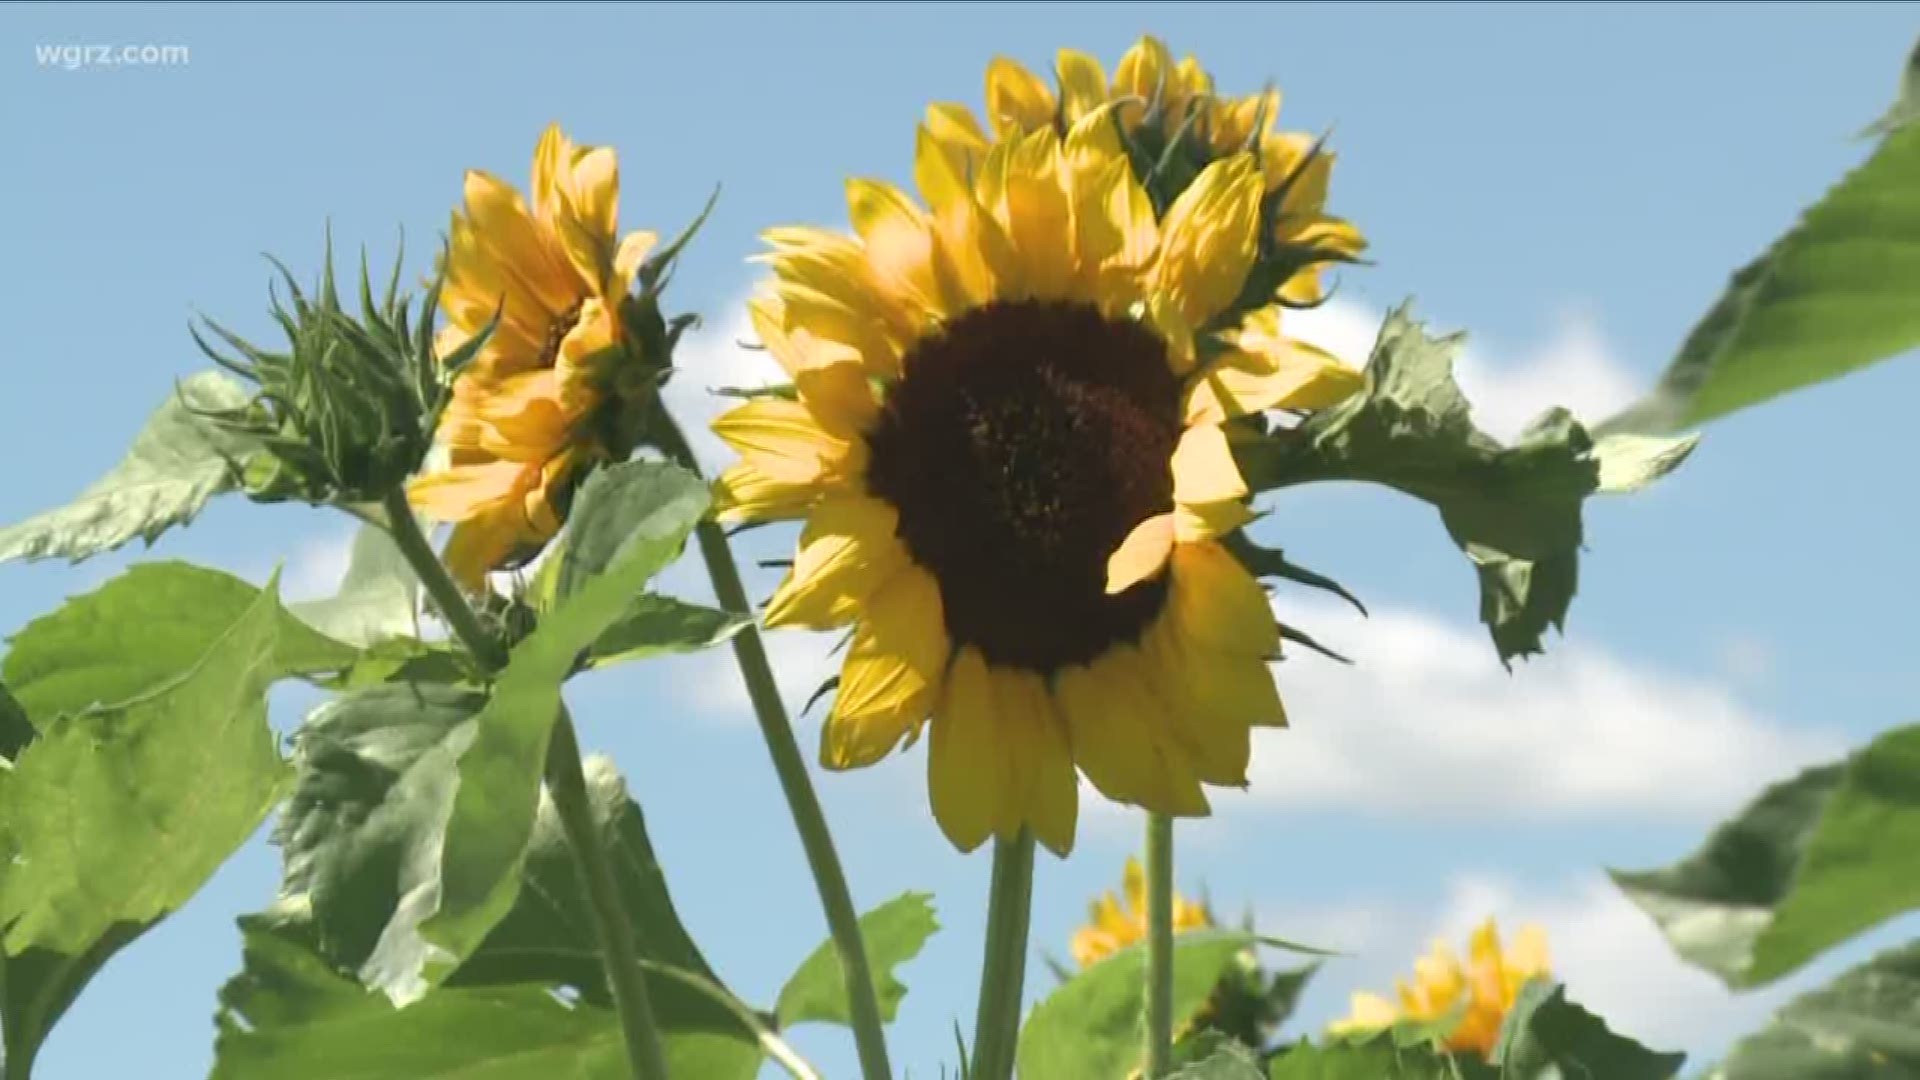 Annual Sunflower Field opens